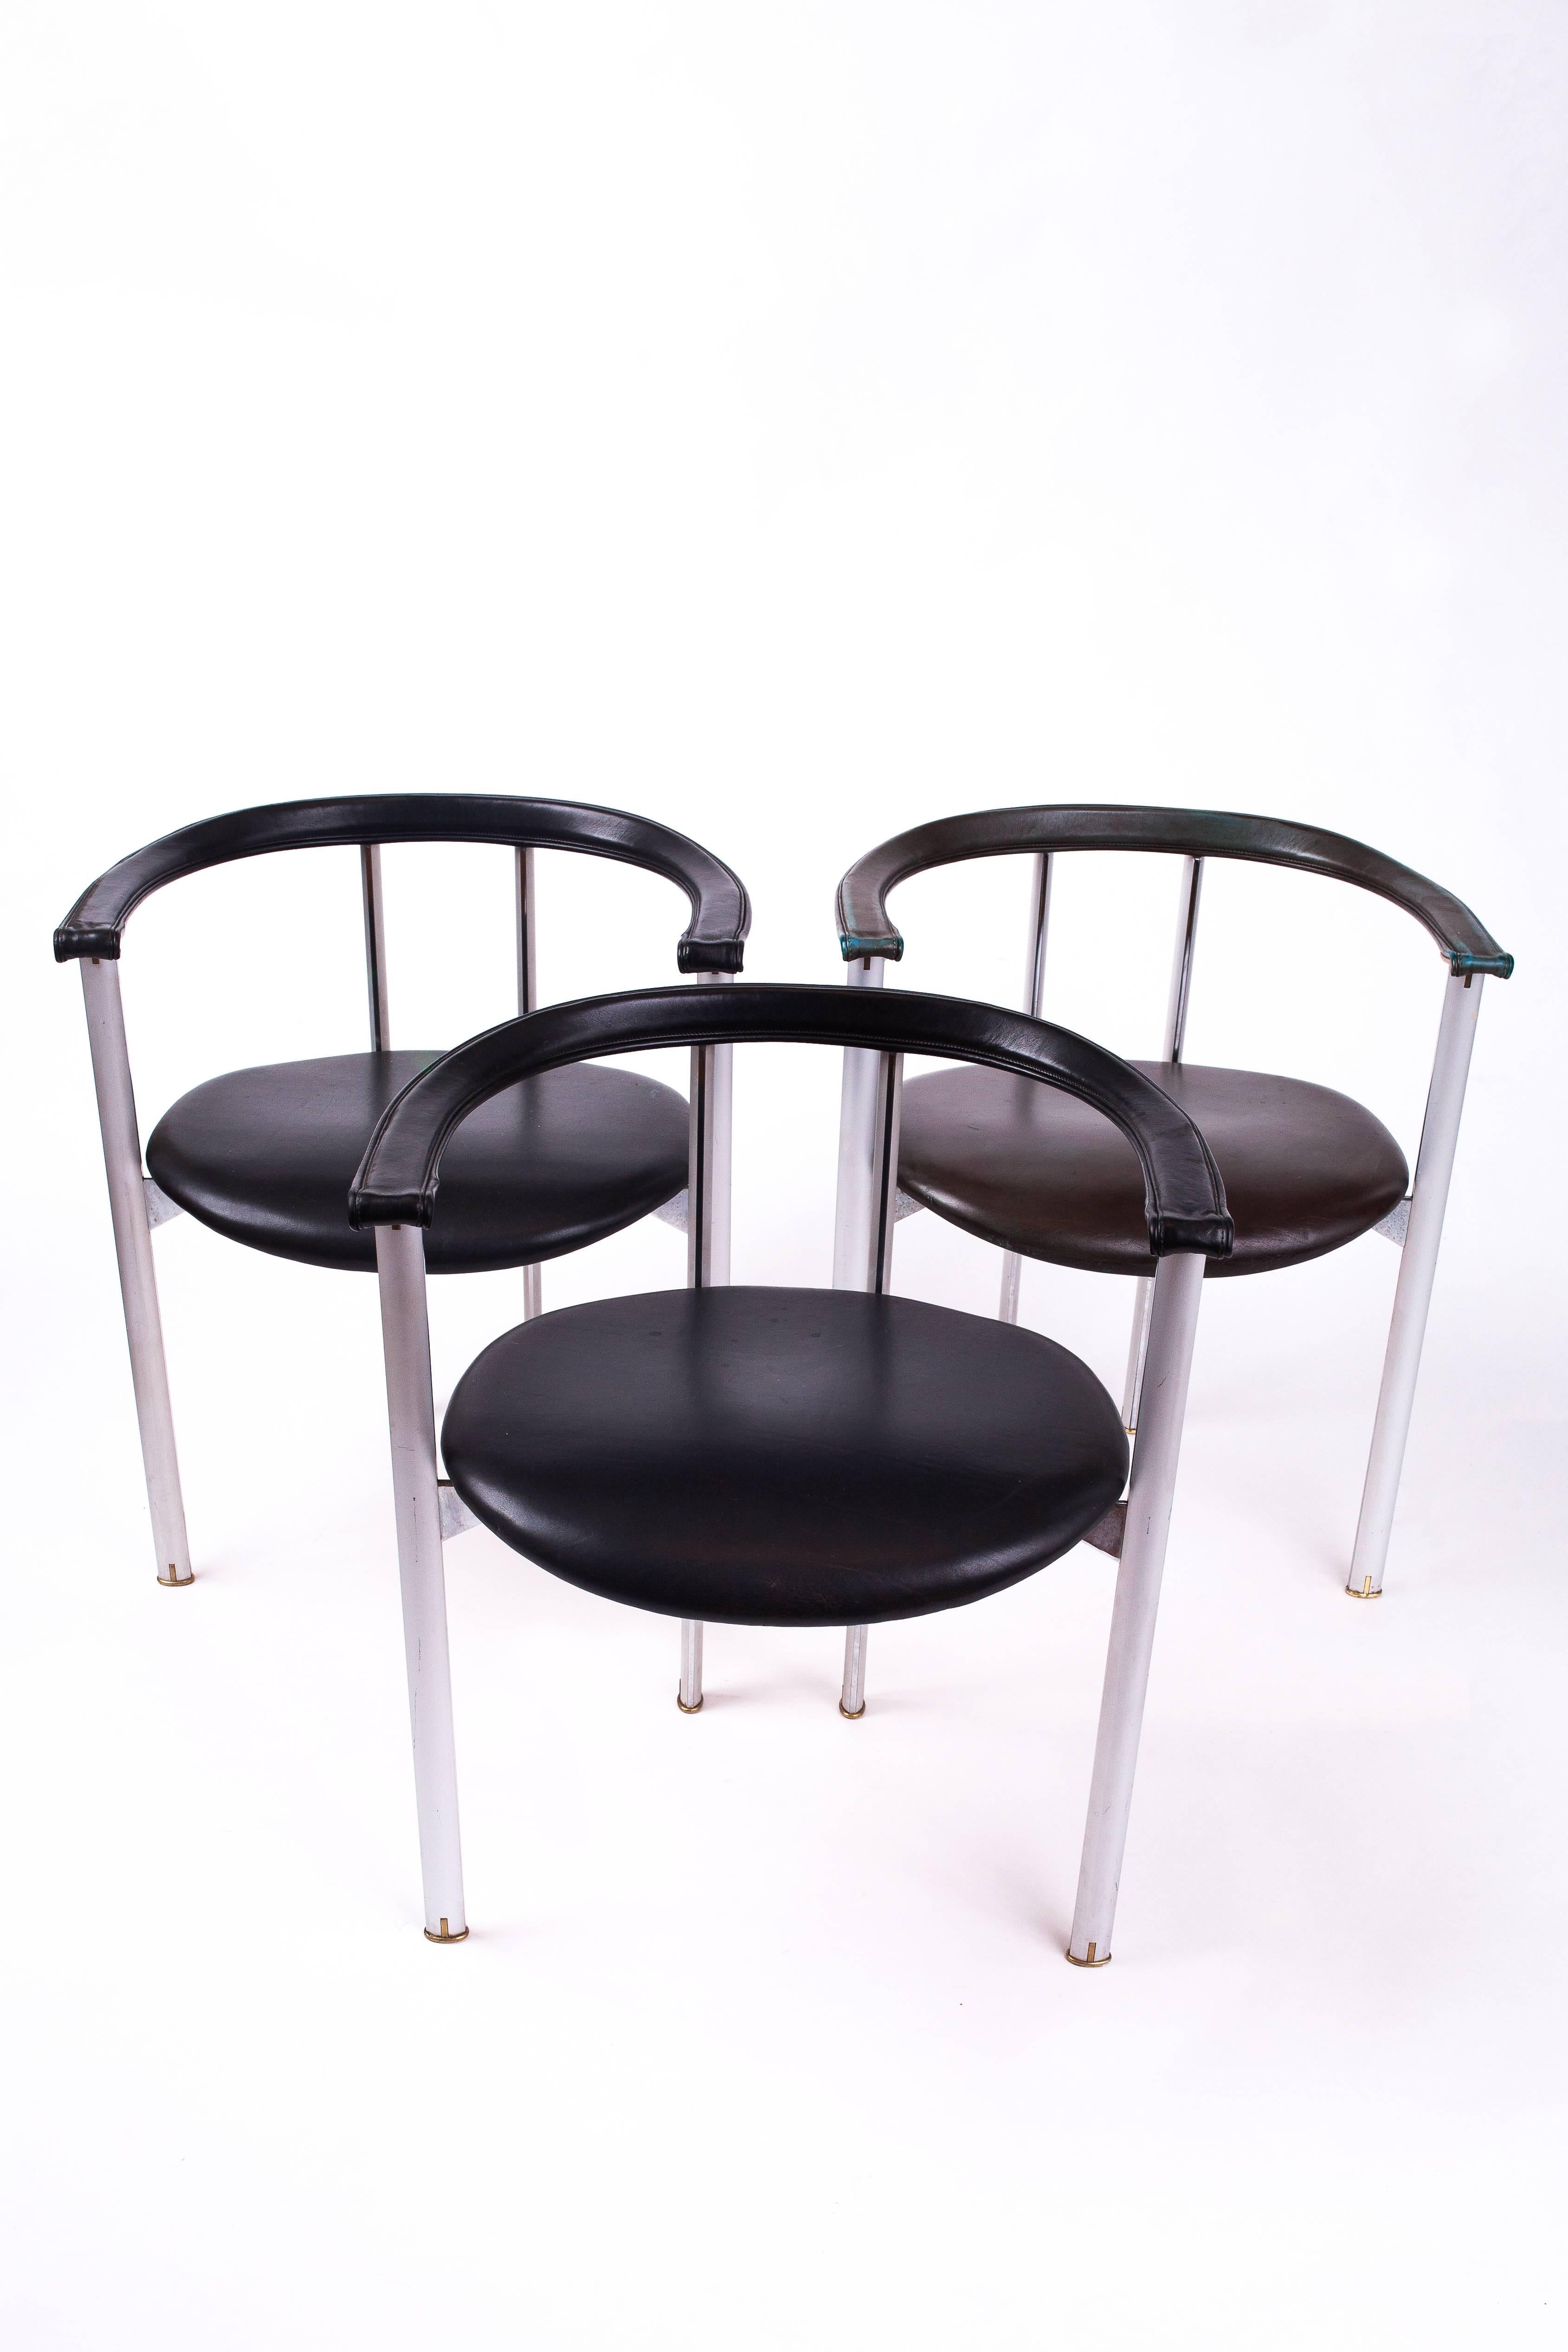 Antonio Citterio (b. 1950)

A striking set of three unusual minimalist steel and black leather armchairs by Antonio Citterio for B & B Italia, reminiscent of Luigi Caccia Dominioni's 